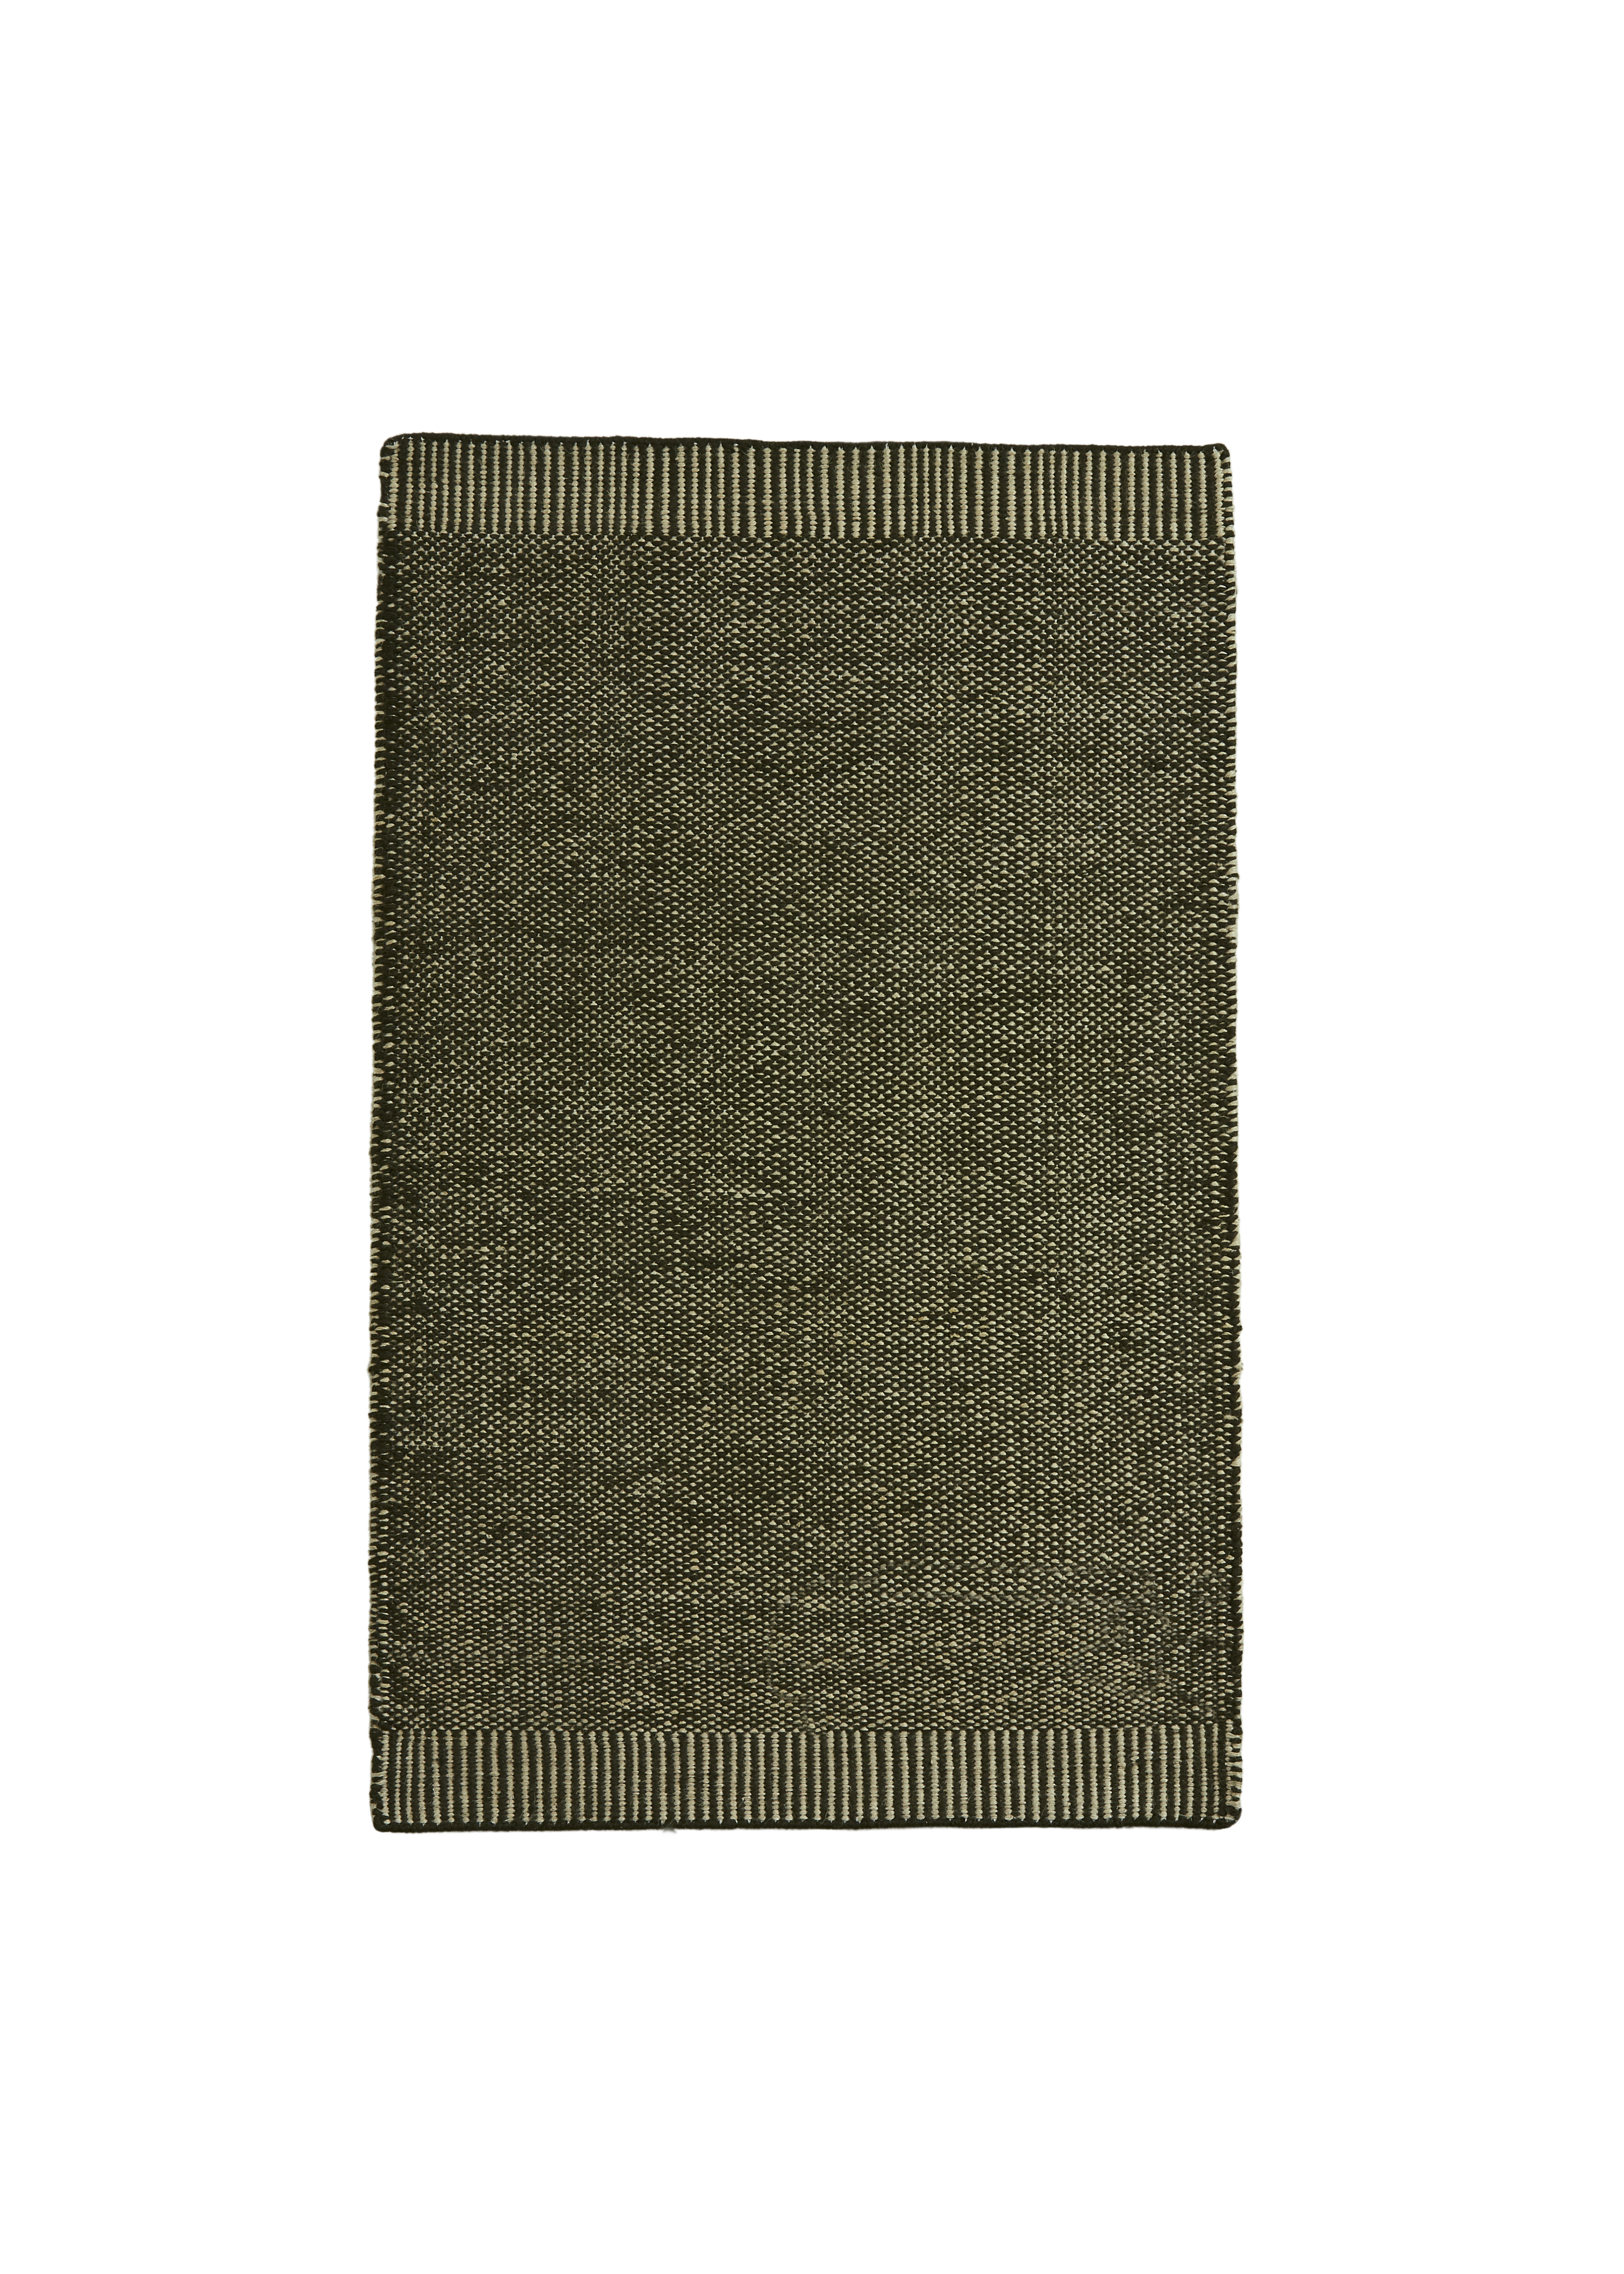 WOUD Rombo gulvtæppe, rektangulær - mosgrøn uld og jute (140x90)